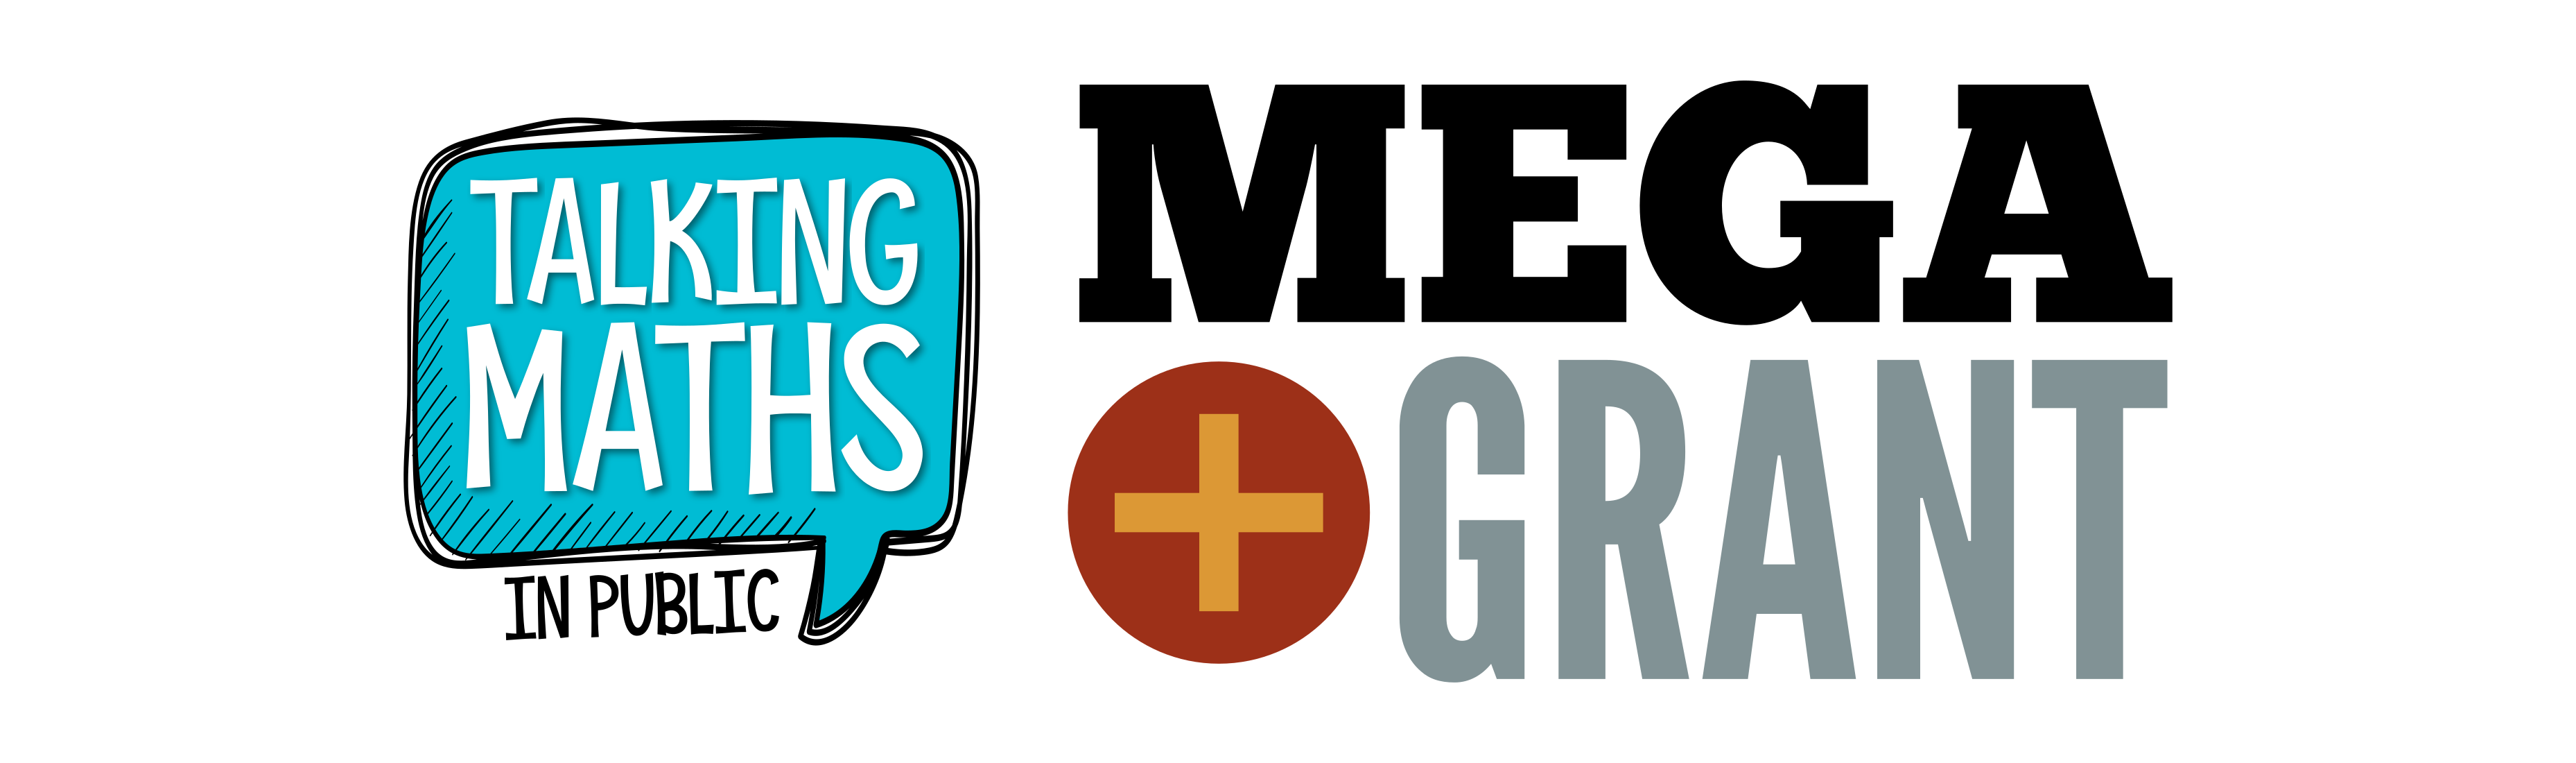 TMiP logo and MEGA Grant logo